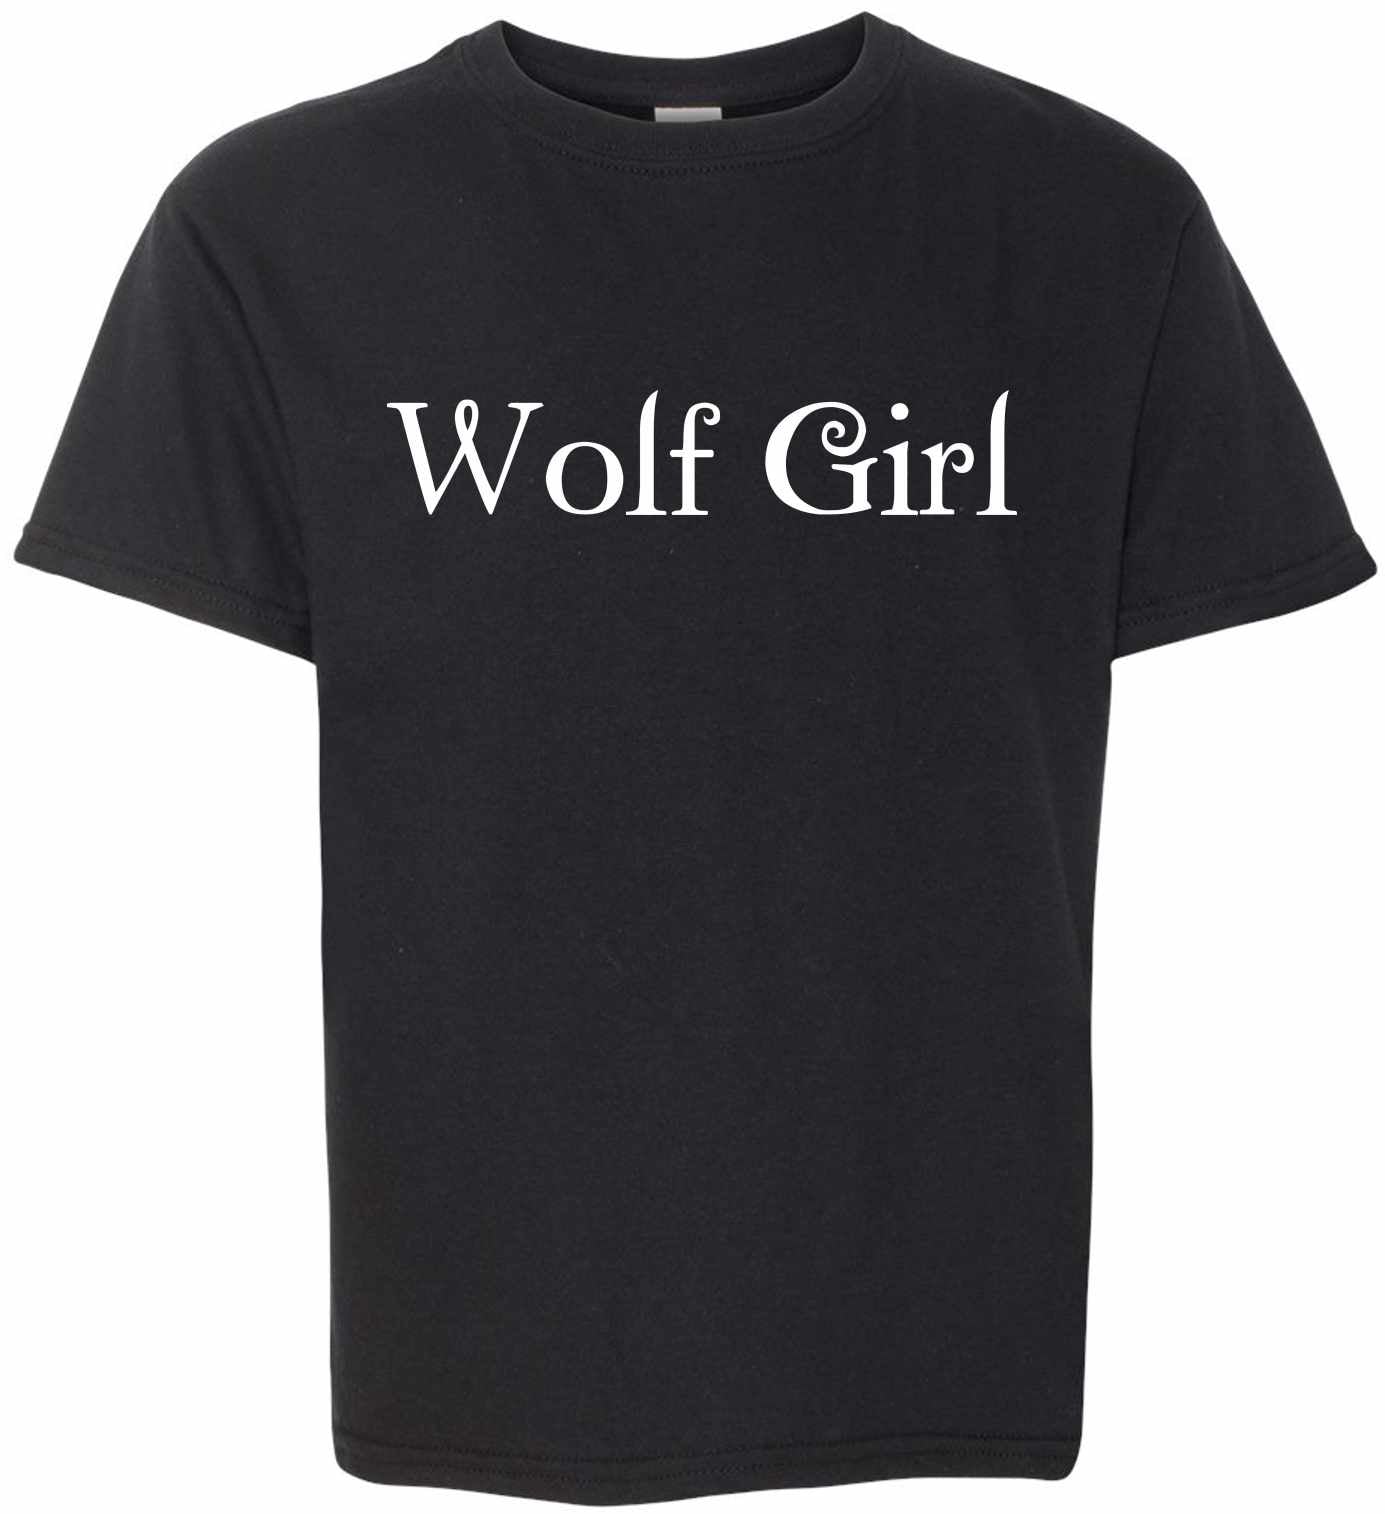 Wolf Girl on Kids T-Shirt (#526-201)